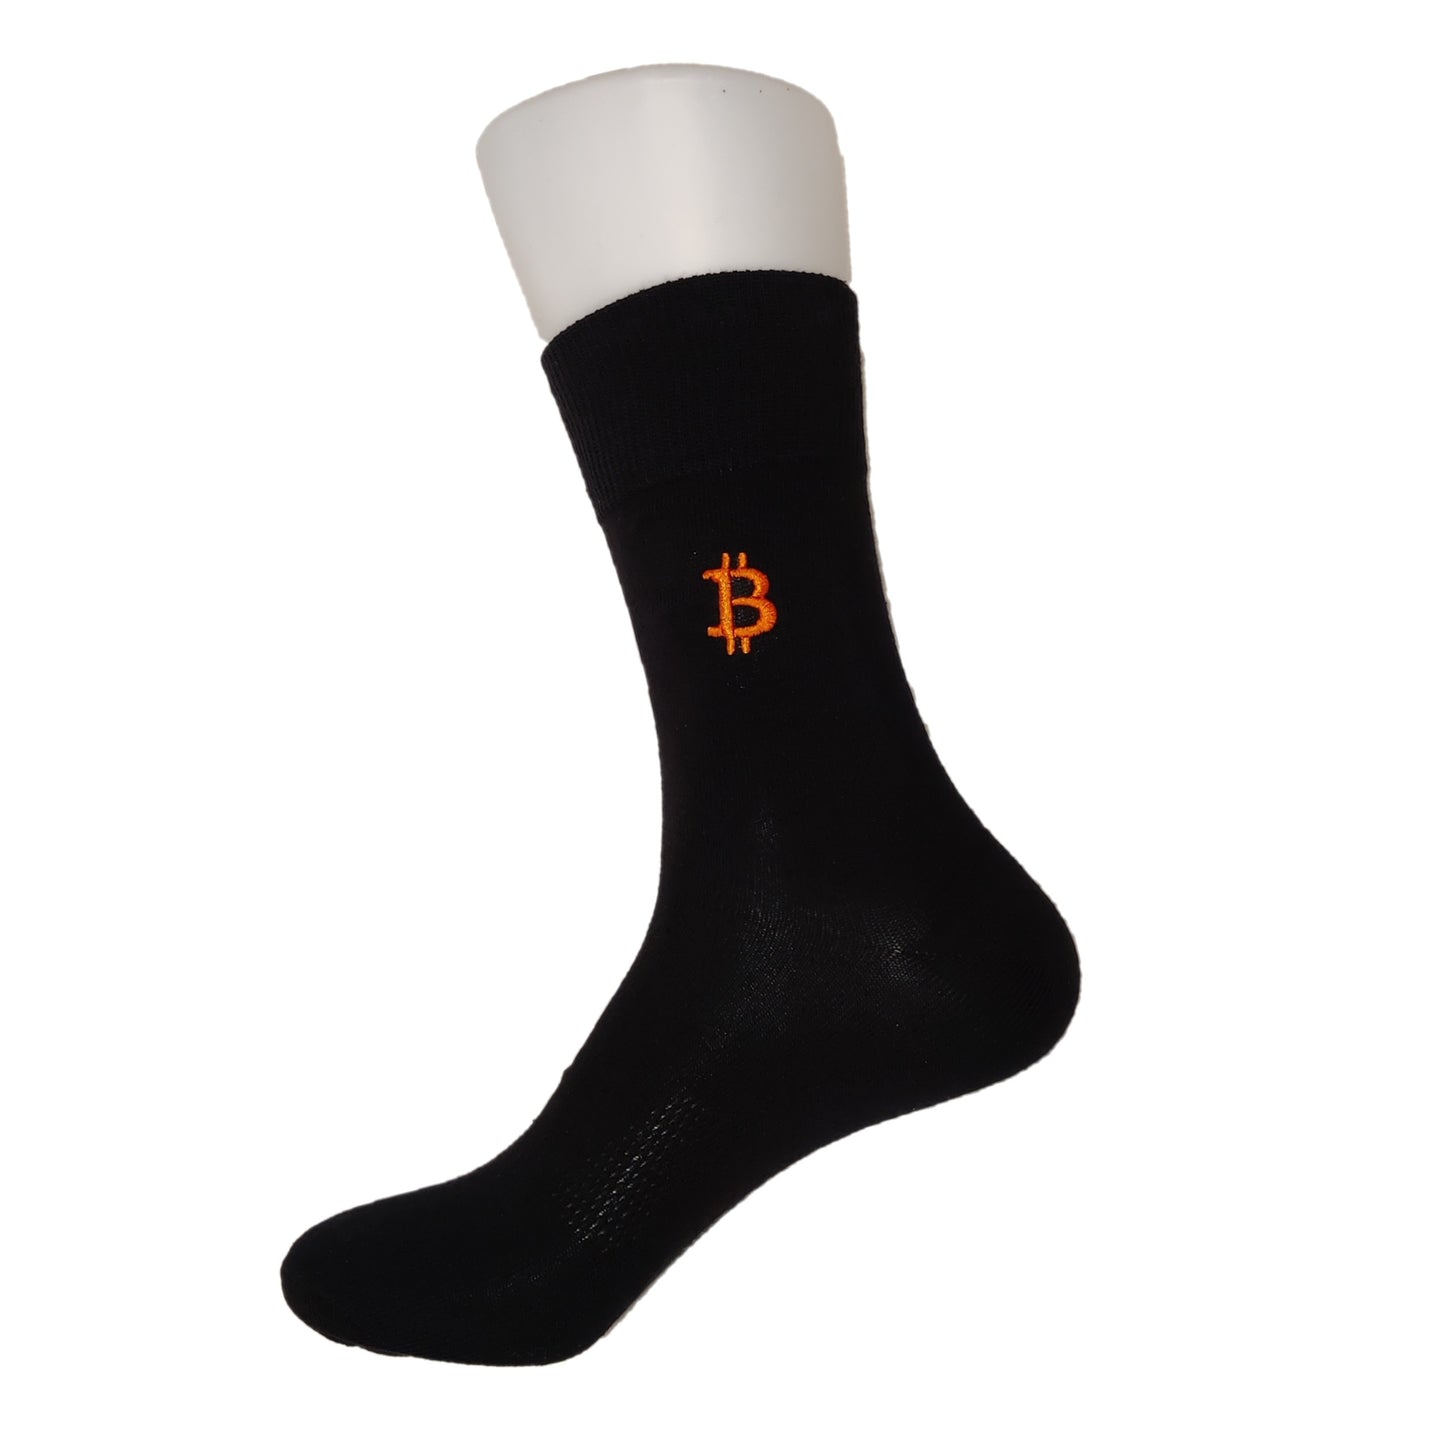 Business-Socken mit Bitcoin-Logo und Wunschtext